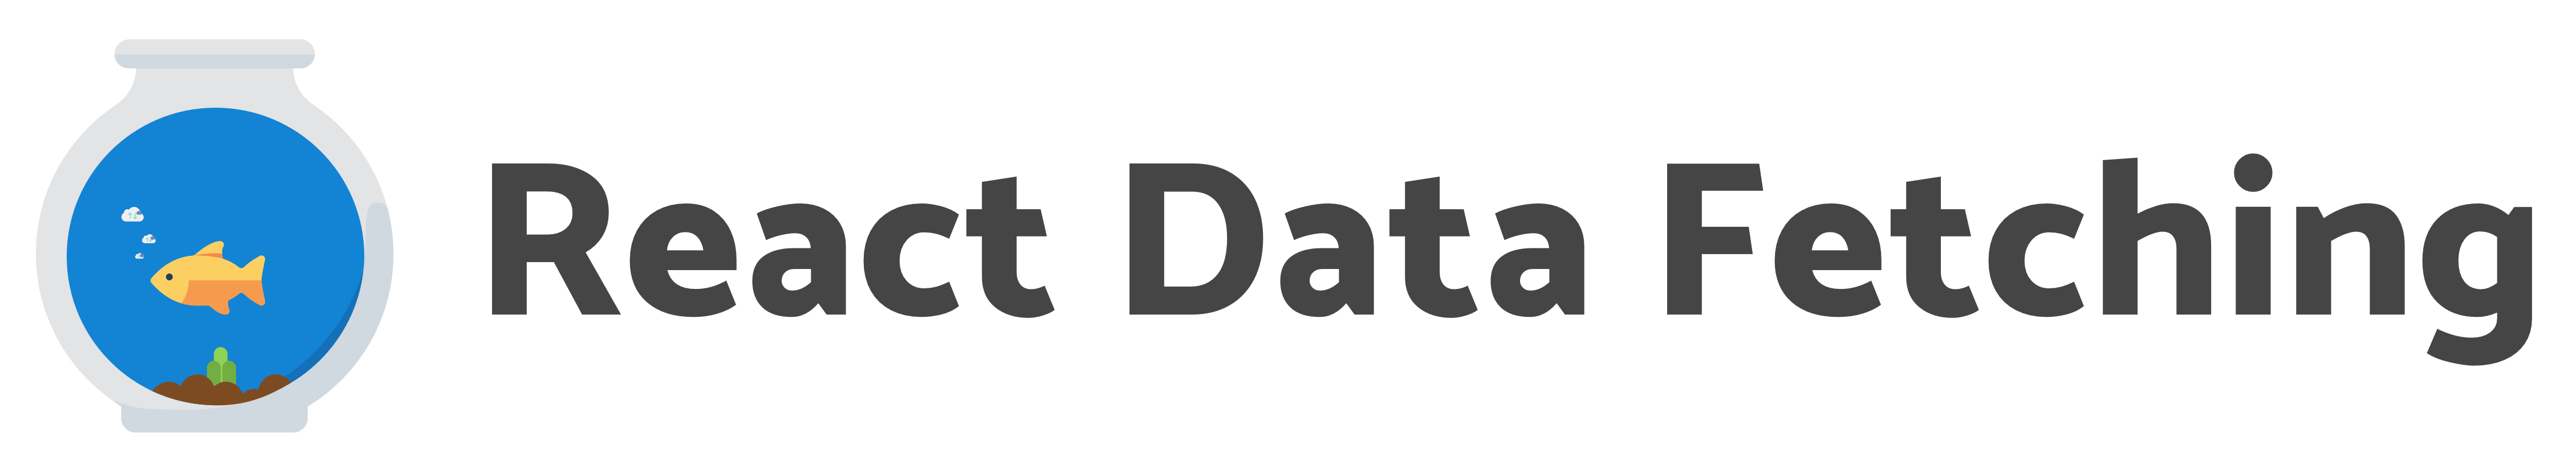 React Data Fetching logo